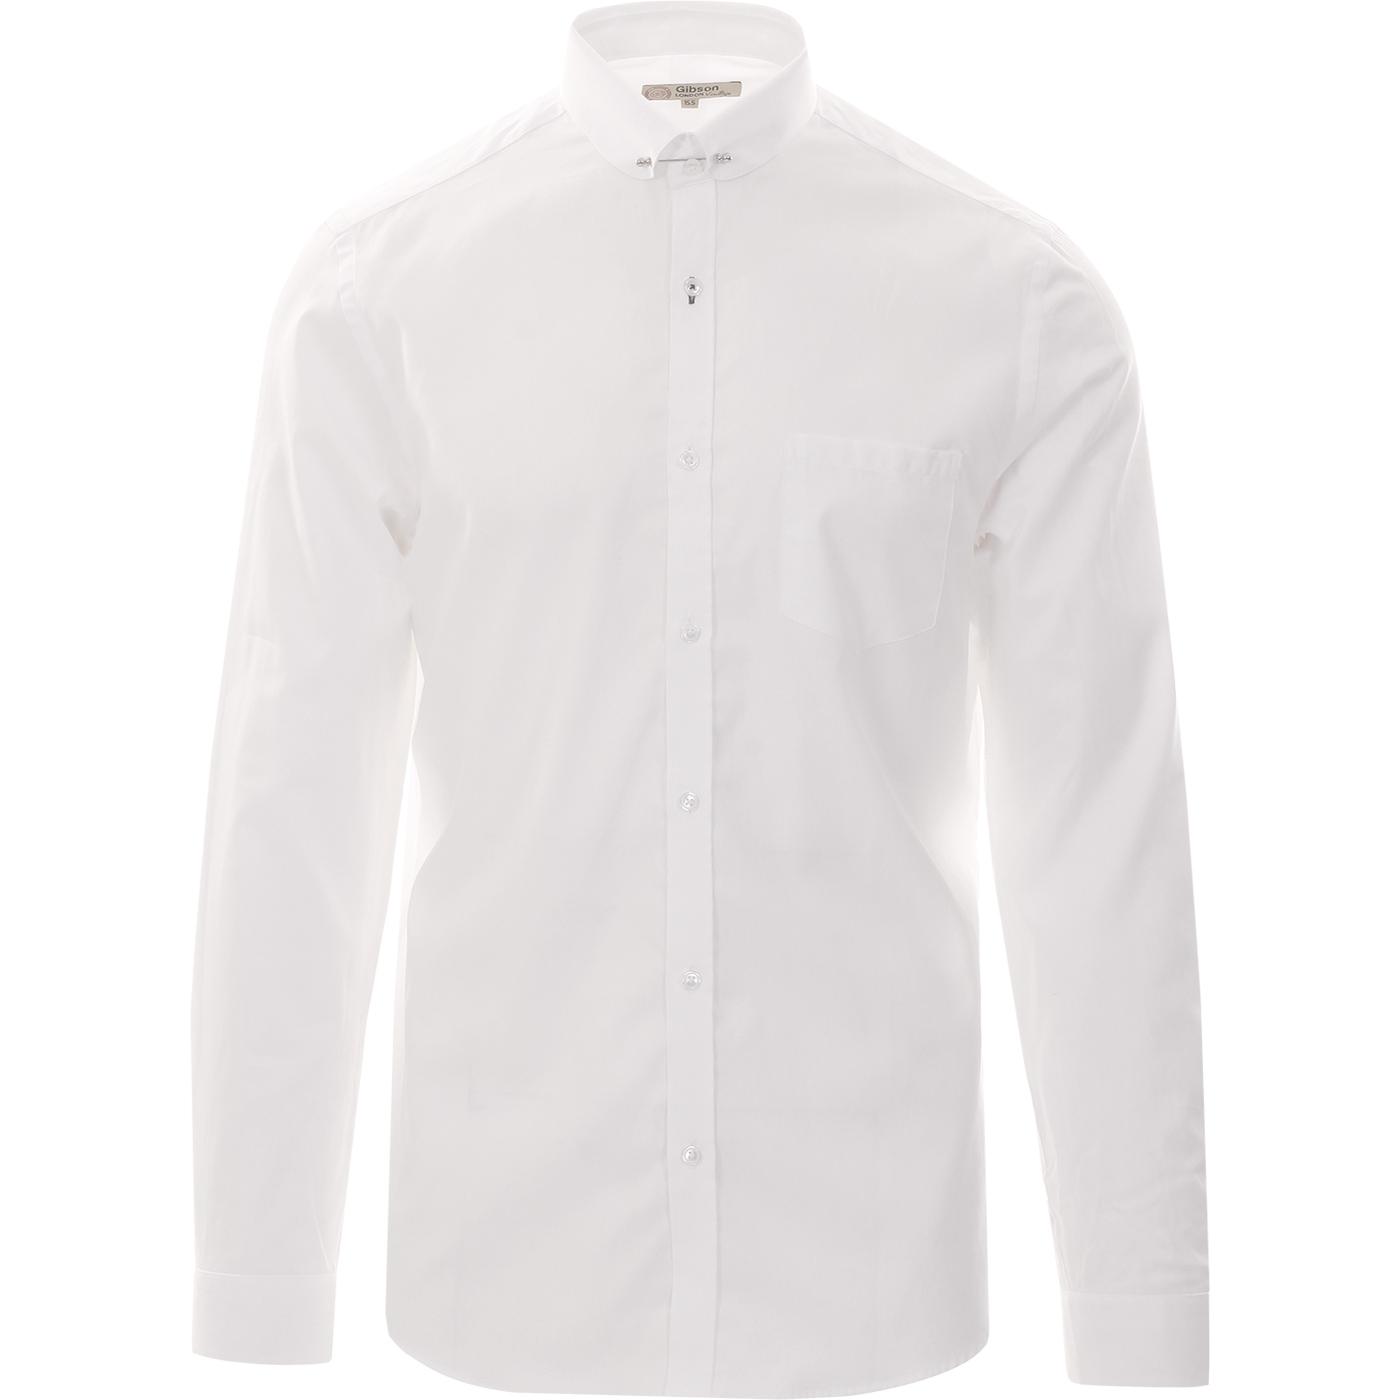 GIBSON LONDON Mod Smart Pin Collar Oxford Shirt in White